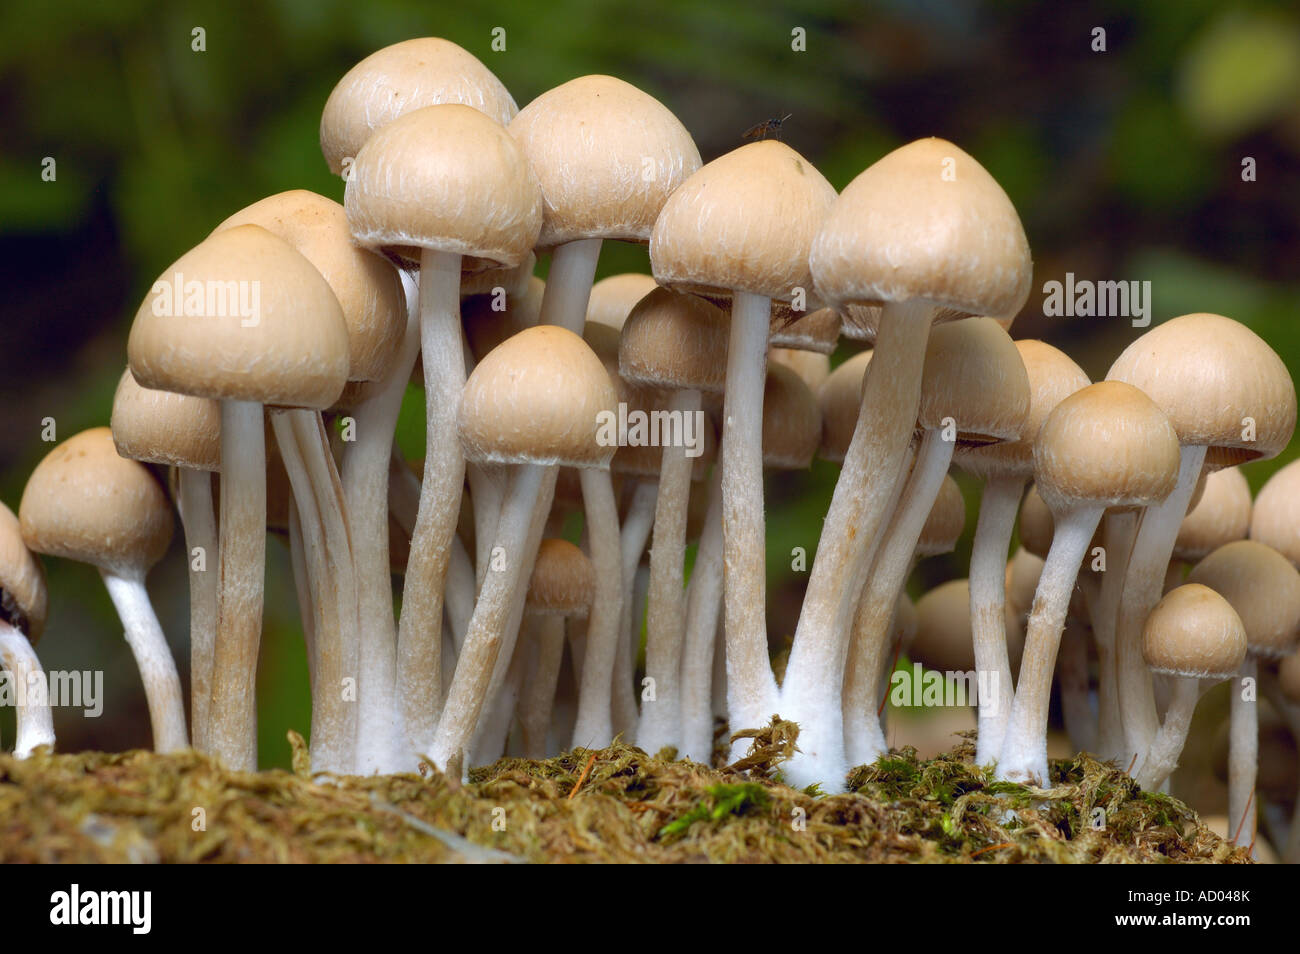 Suburban Psathyrella Psathyrella candolleana common gilled mushroom grow in clusters on ground common in Europe America Stock Photo